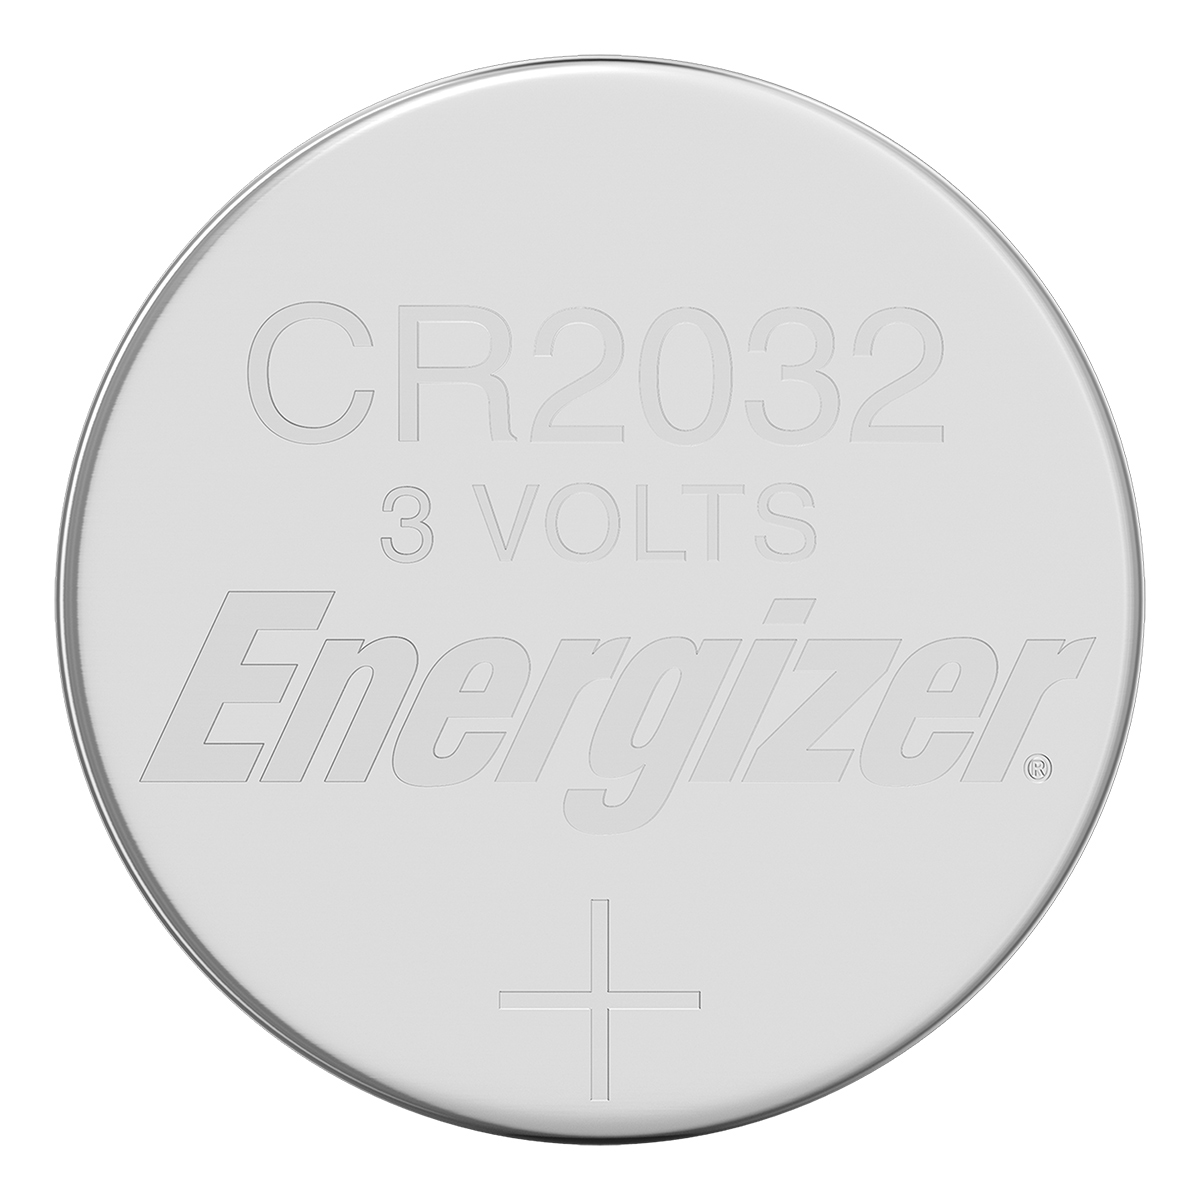 Energizer Lithiumbatterien CR2032